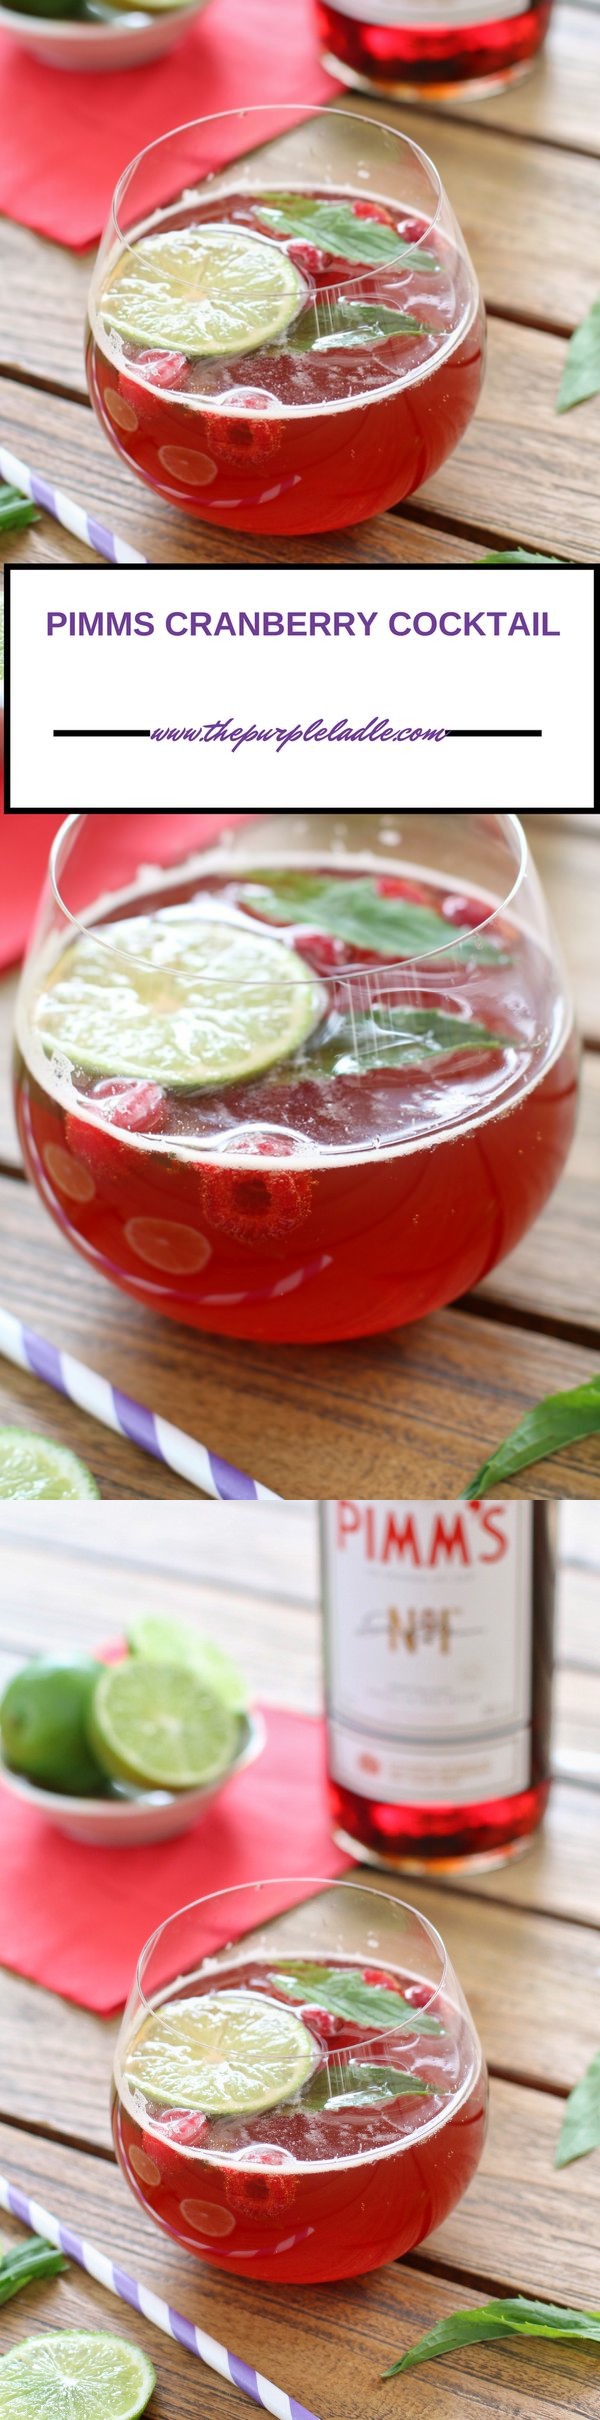 Pimms cranberry cocktail